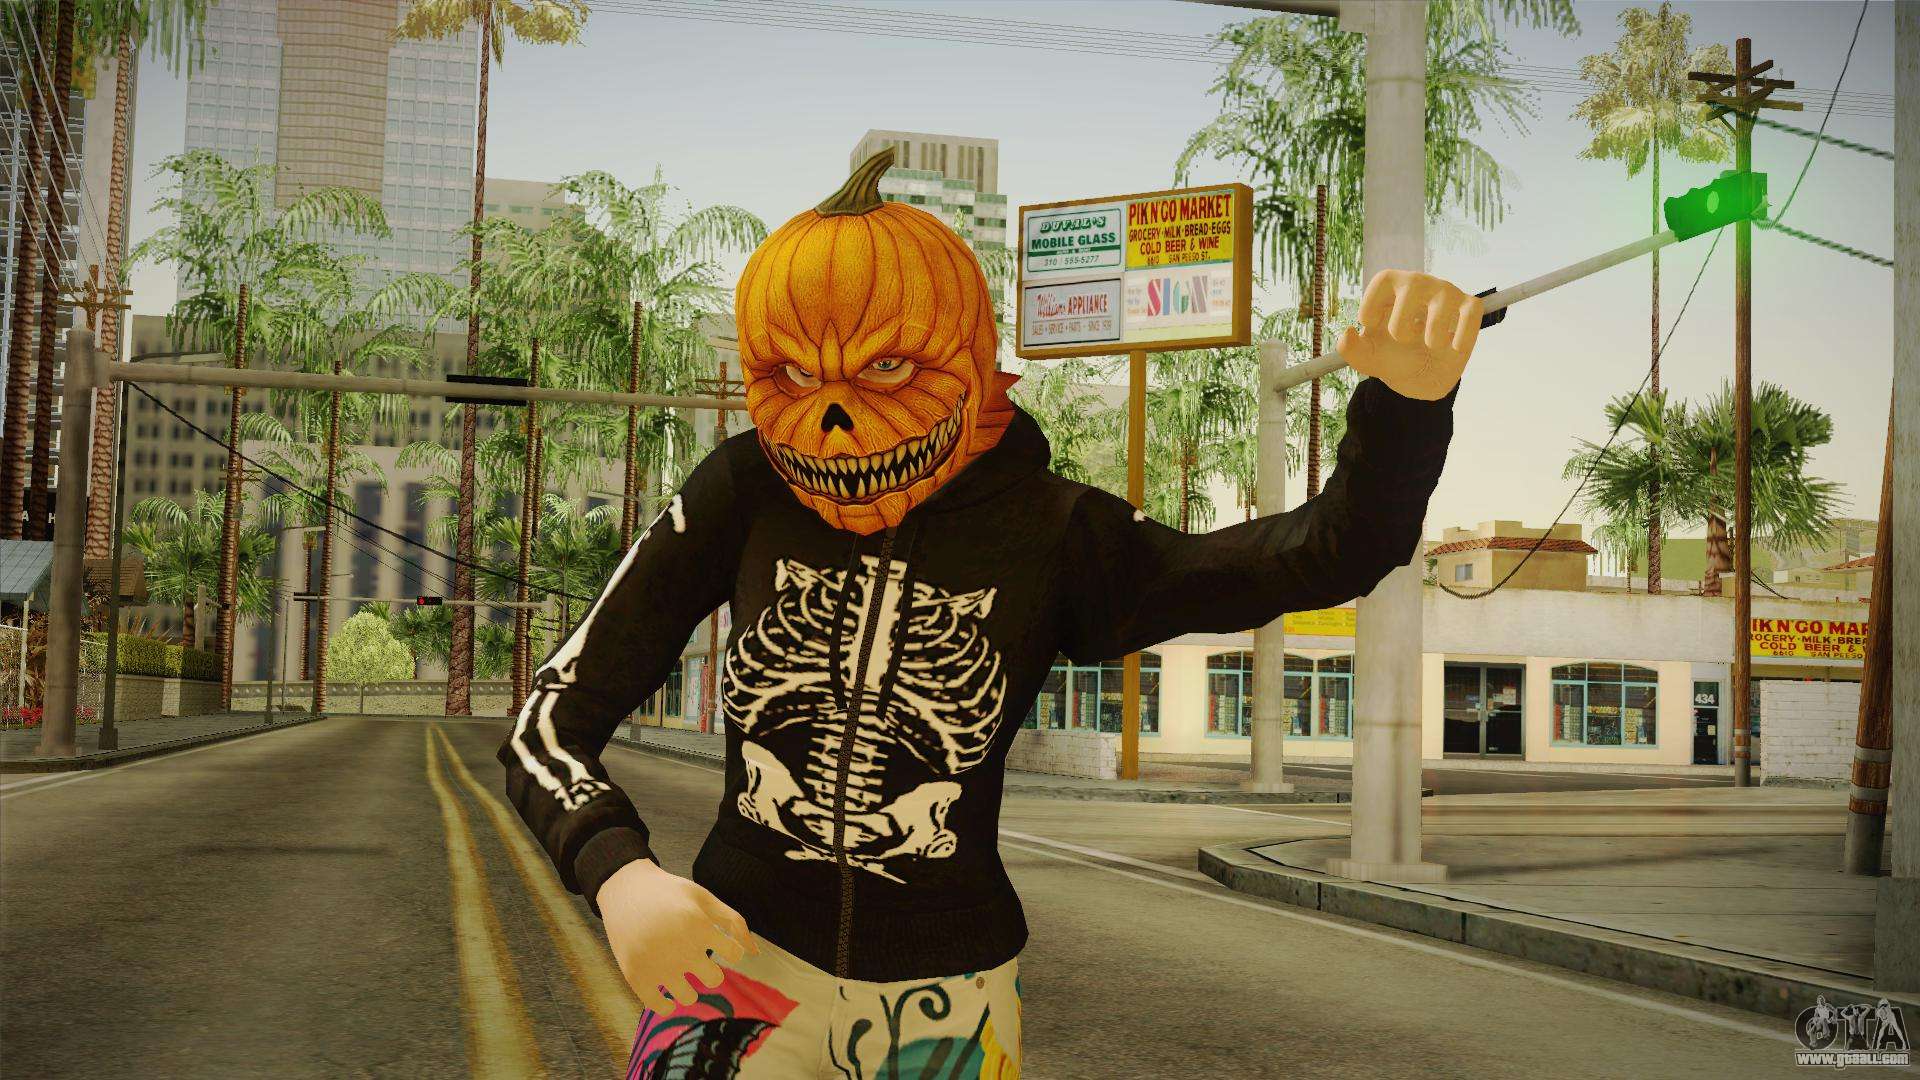 GTA 5 Halloween Skin 1 for GTA San Andreas